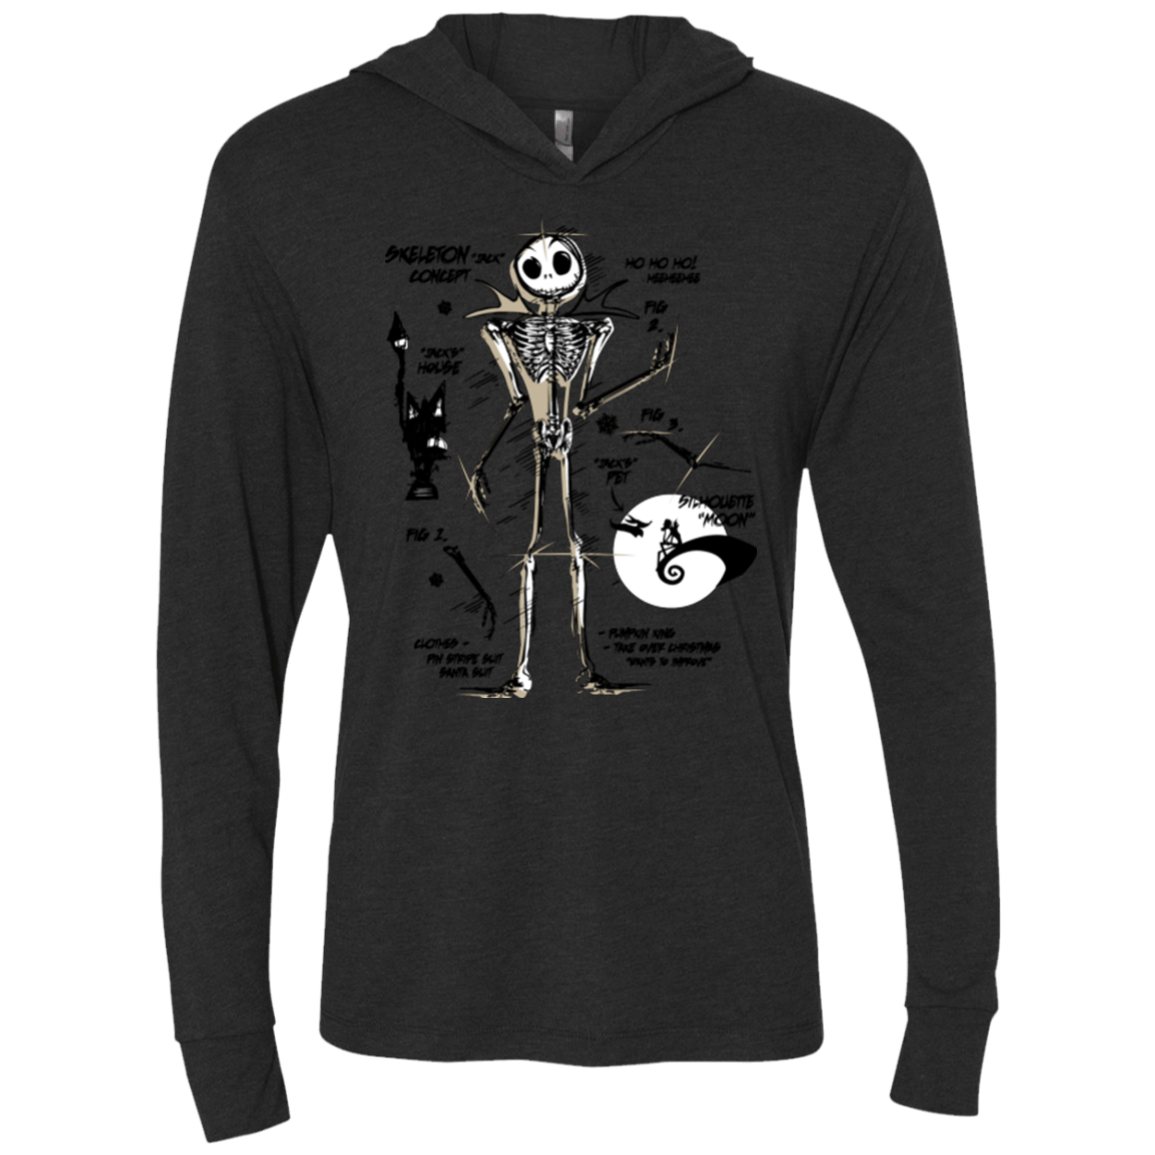 T-Shirts Vintage Black / X-Small Skeleton Concept Triblend Long Sleeve Hoodie Tee